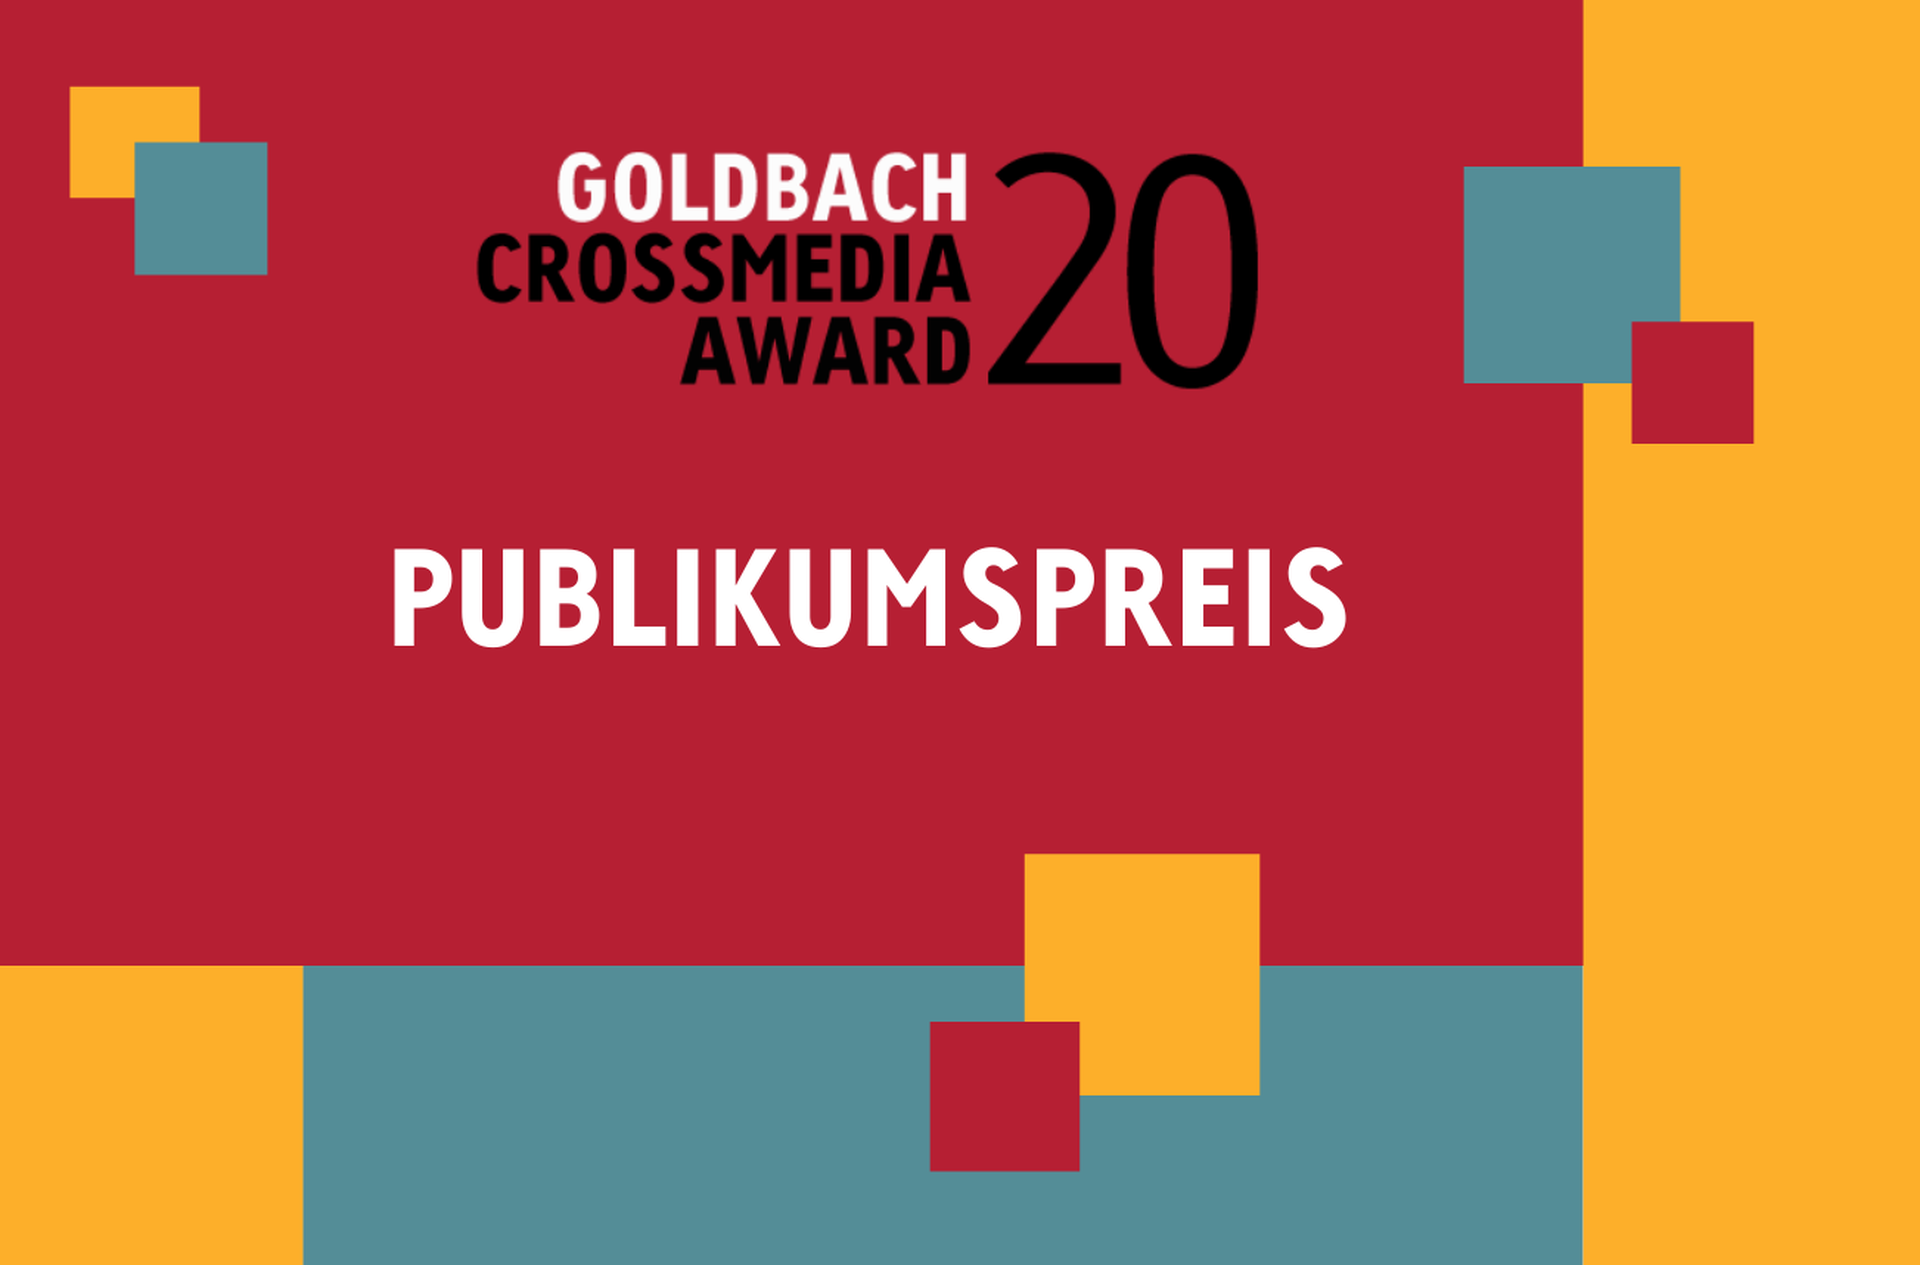 Graphik: Crossmedia Award Publikumspreis